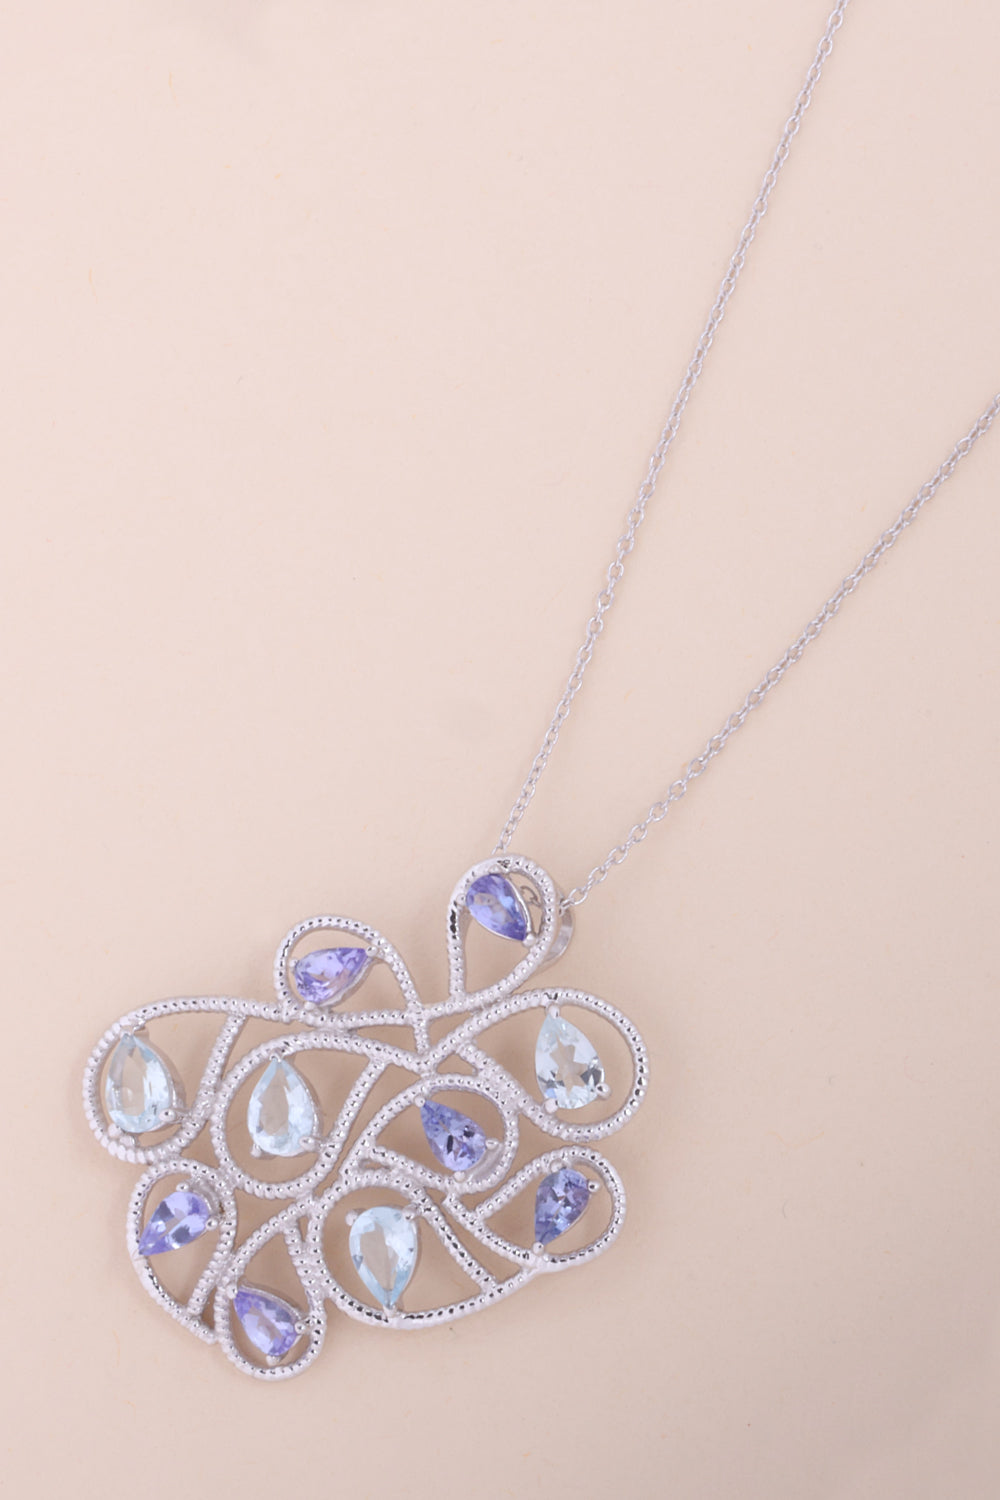 Aquamarine With Tanzanite Sterling Silver Necklace Pendant Chain - Avishya 